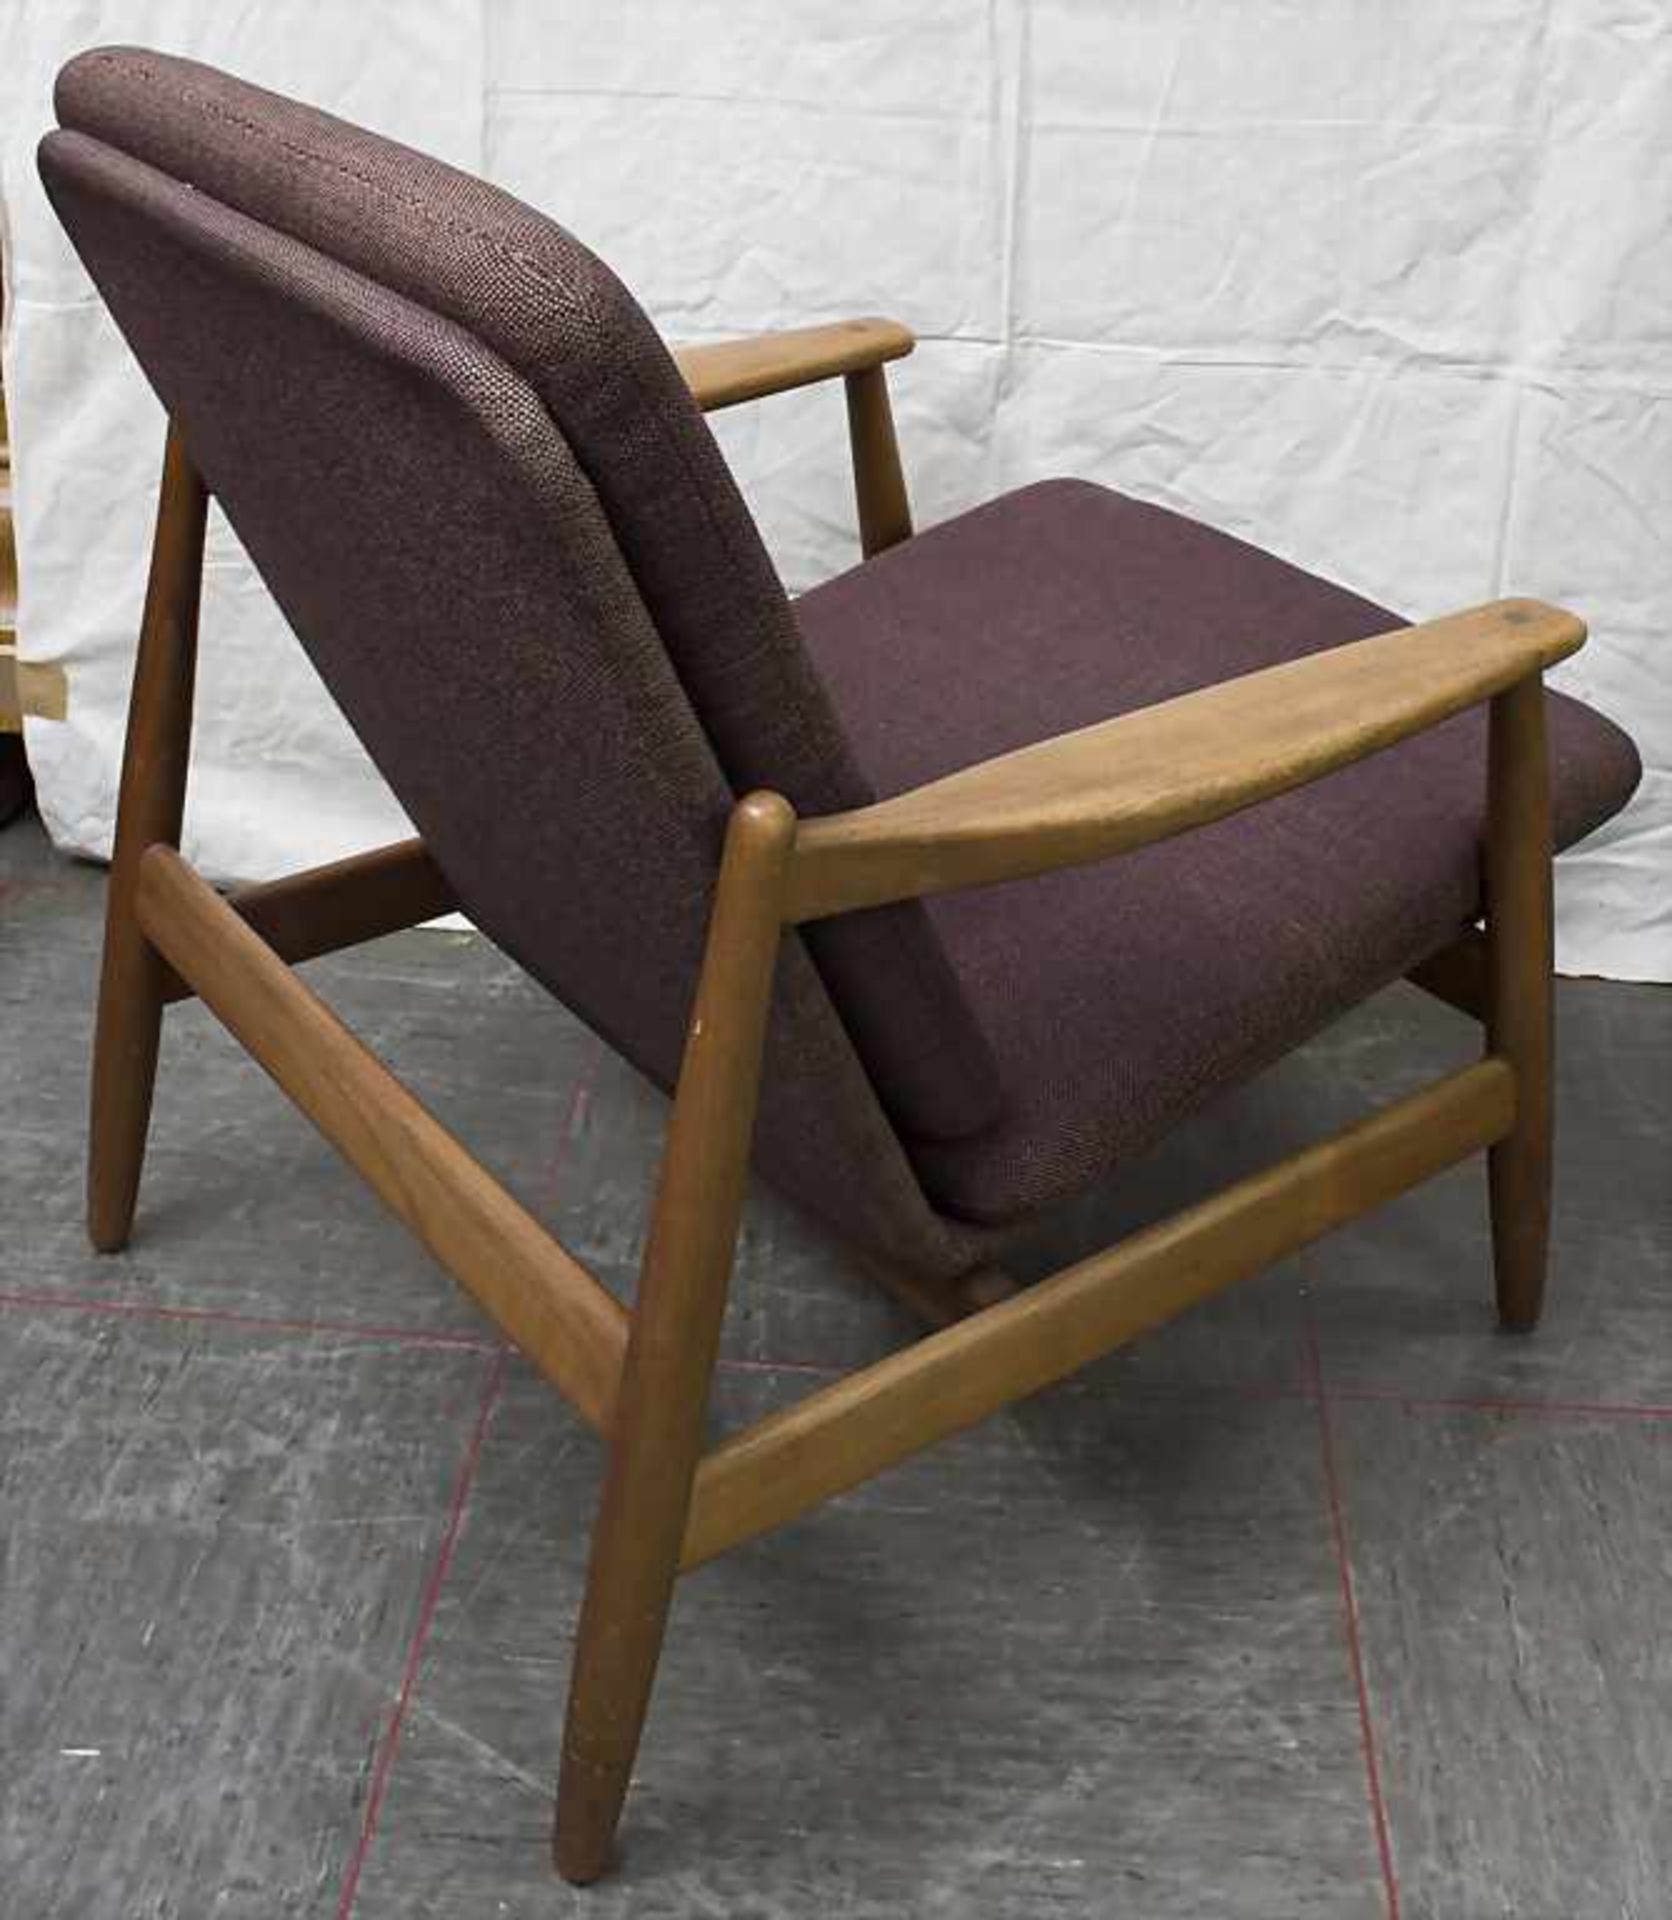 Sessel / An armchair, Hans Olsen, 1960er JahreMaterial: Teakholz, Polster mit braunem Stoffbezug, - Bild 2 aus 4